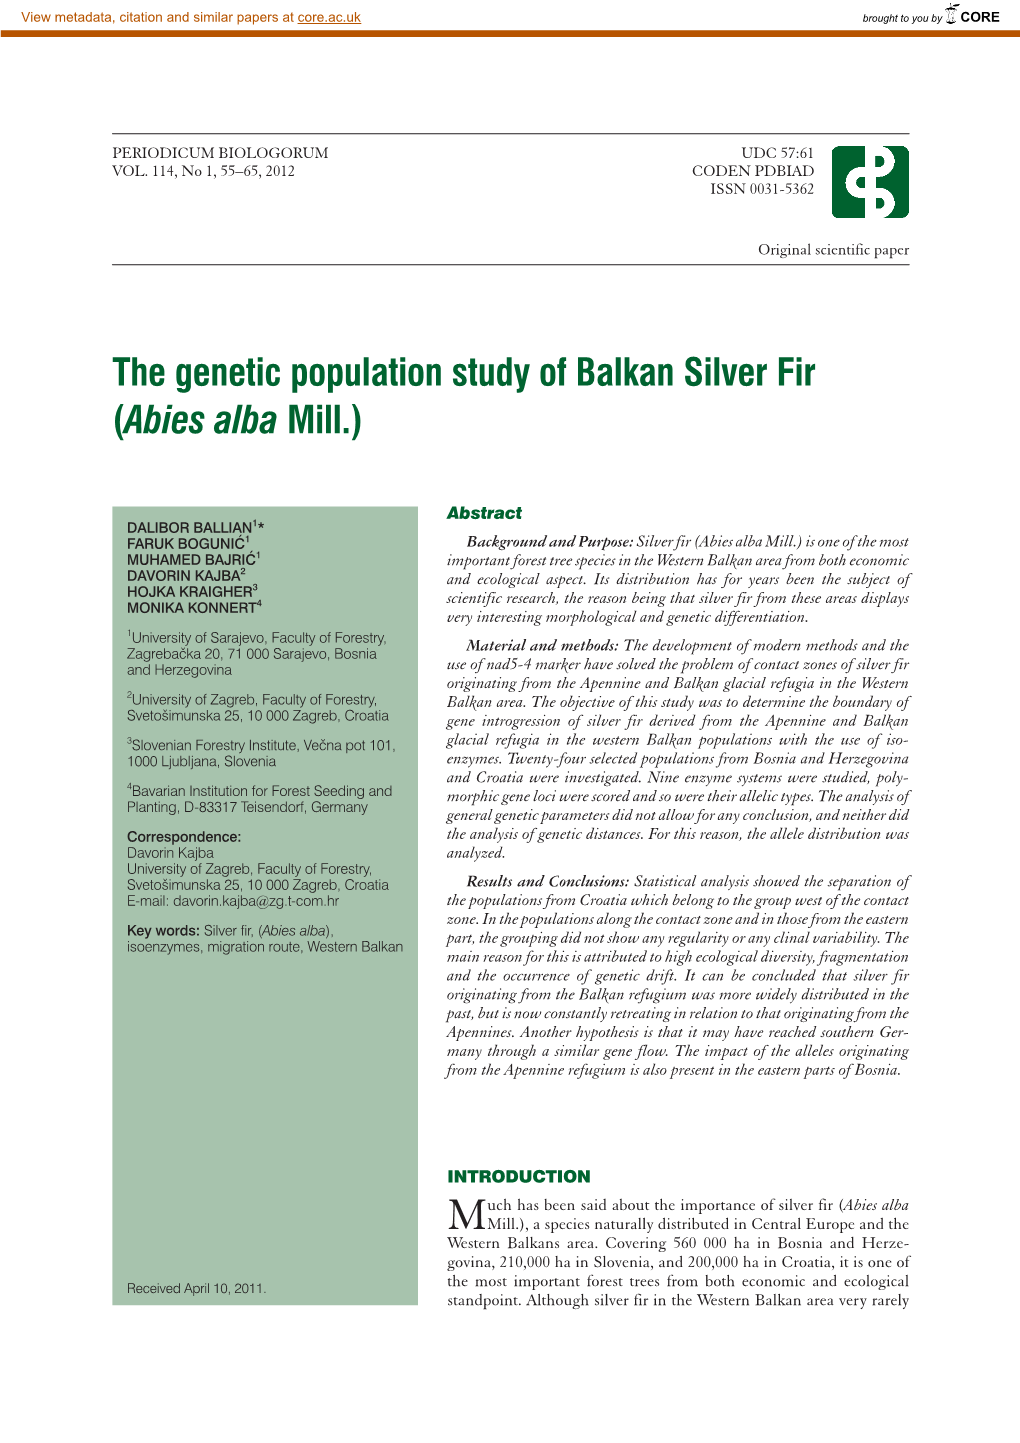 The Genetic Population Study of Balkan Silver Fir (Abies Alba Mill.)